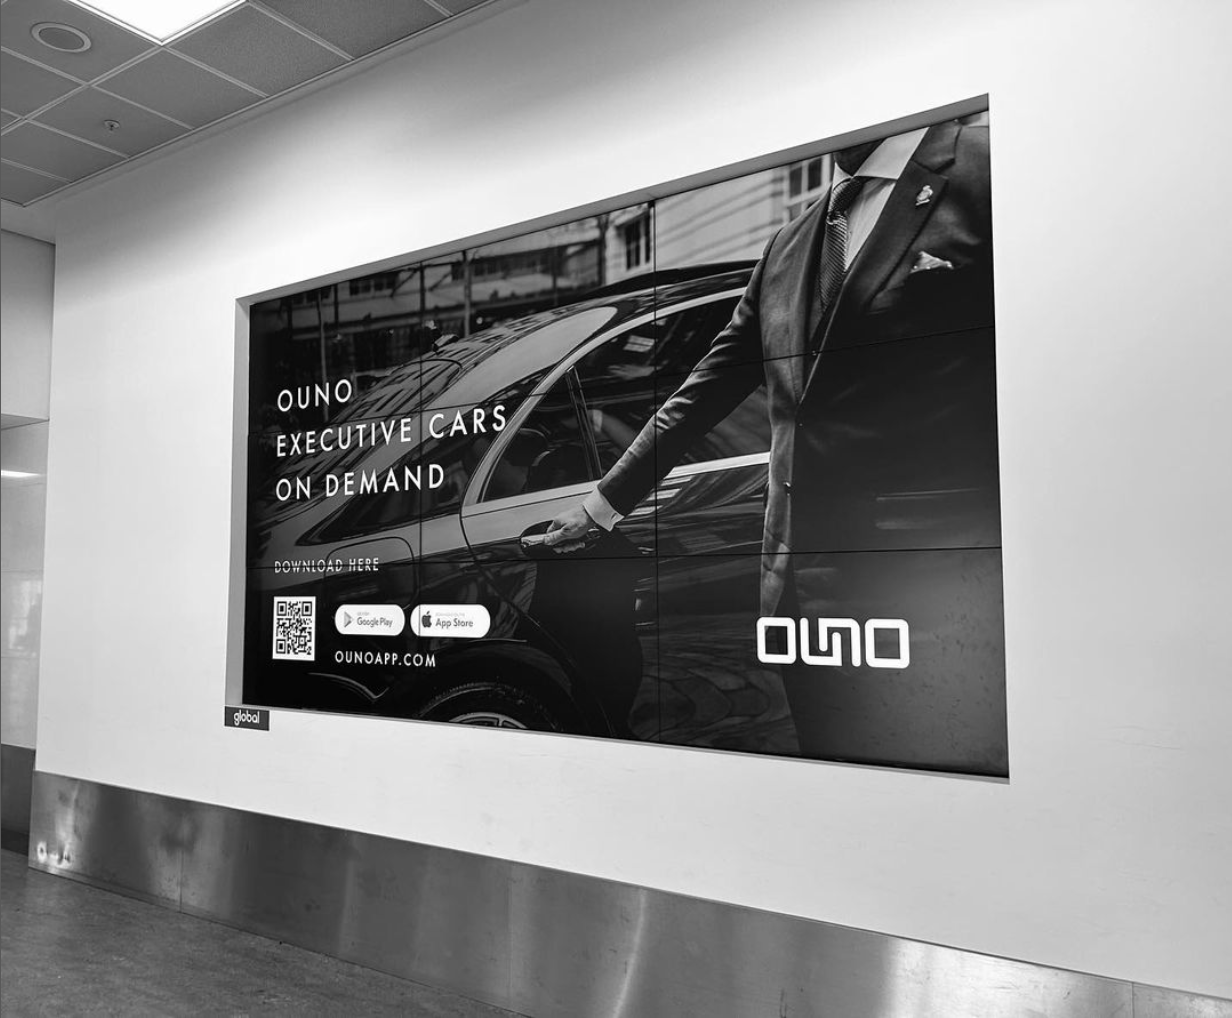 An advertising sign of OUNO